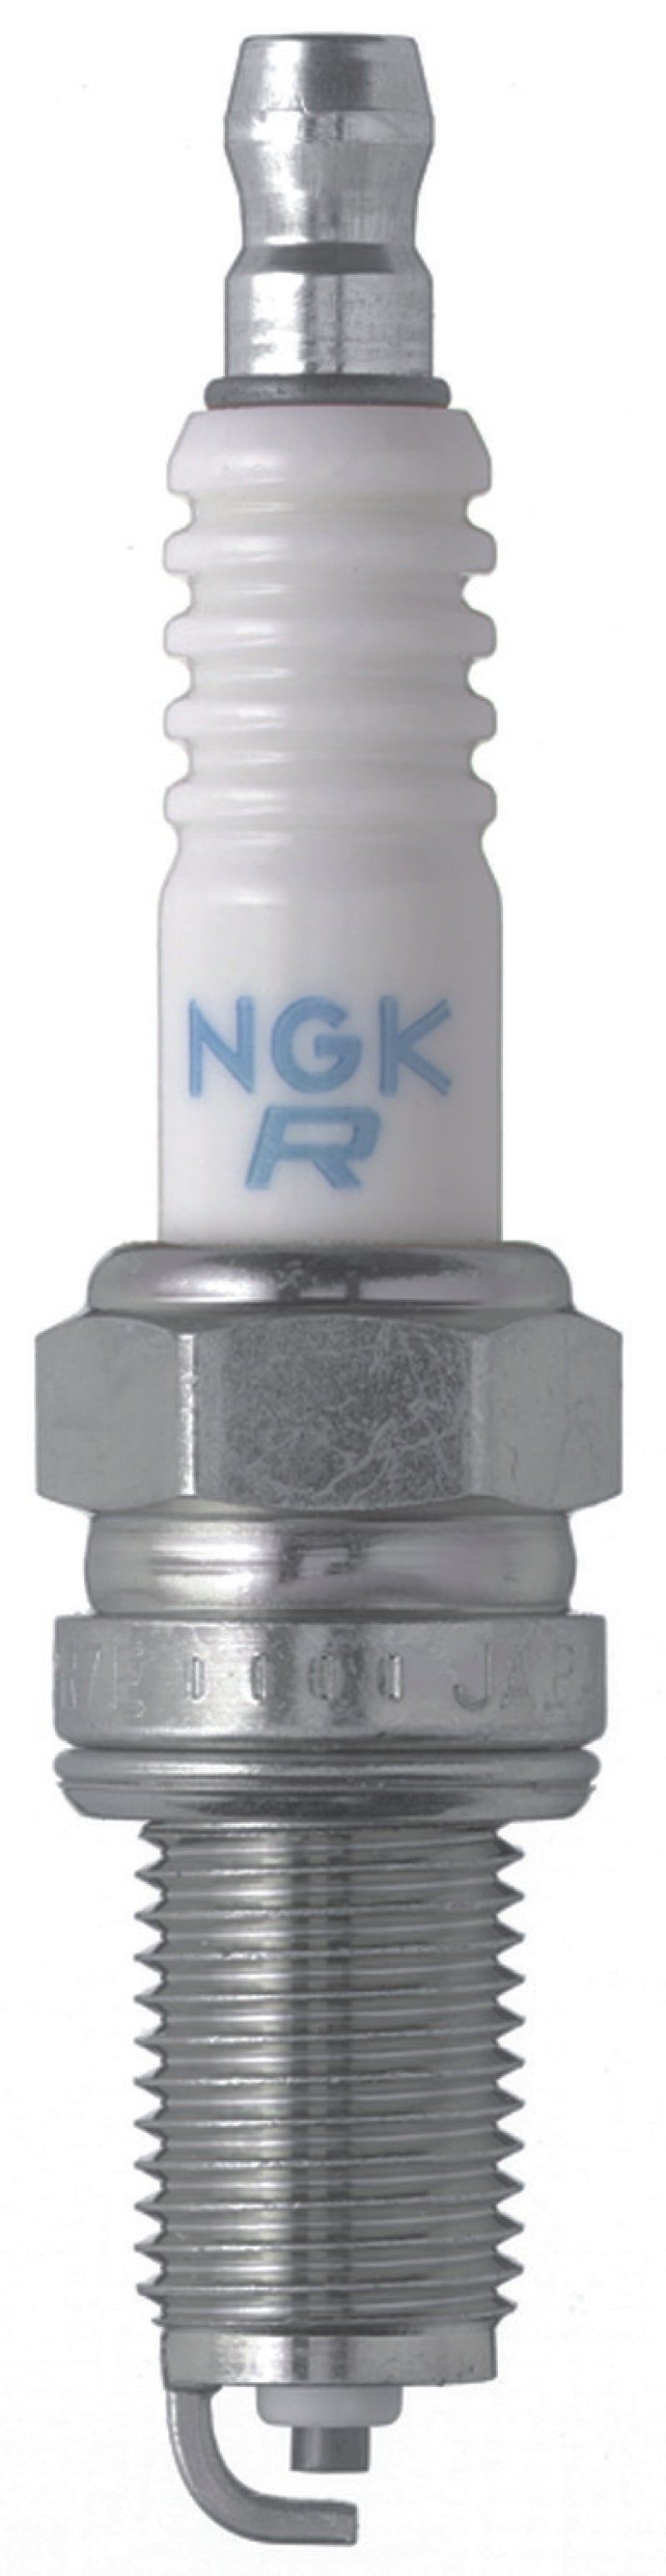 NGK Copper Spark Plug Box of 4 (DCPR8E).